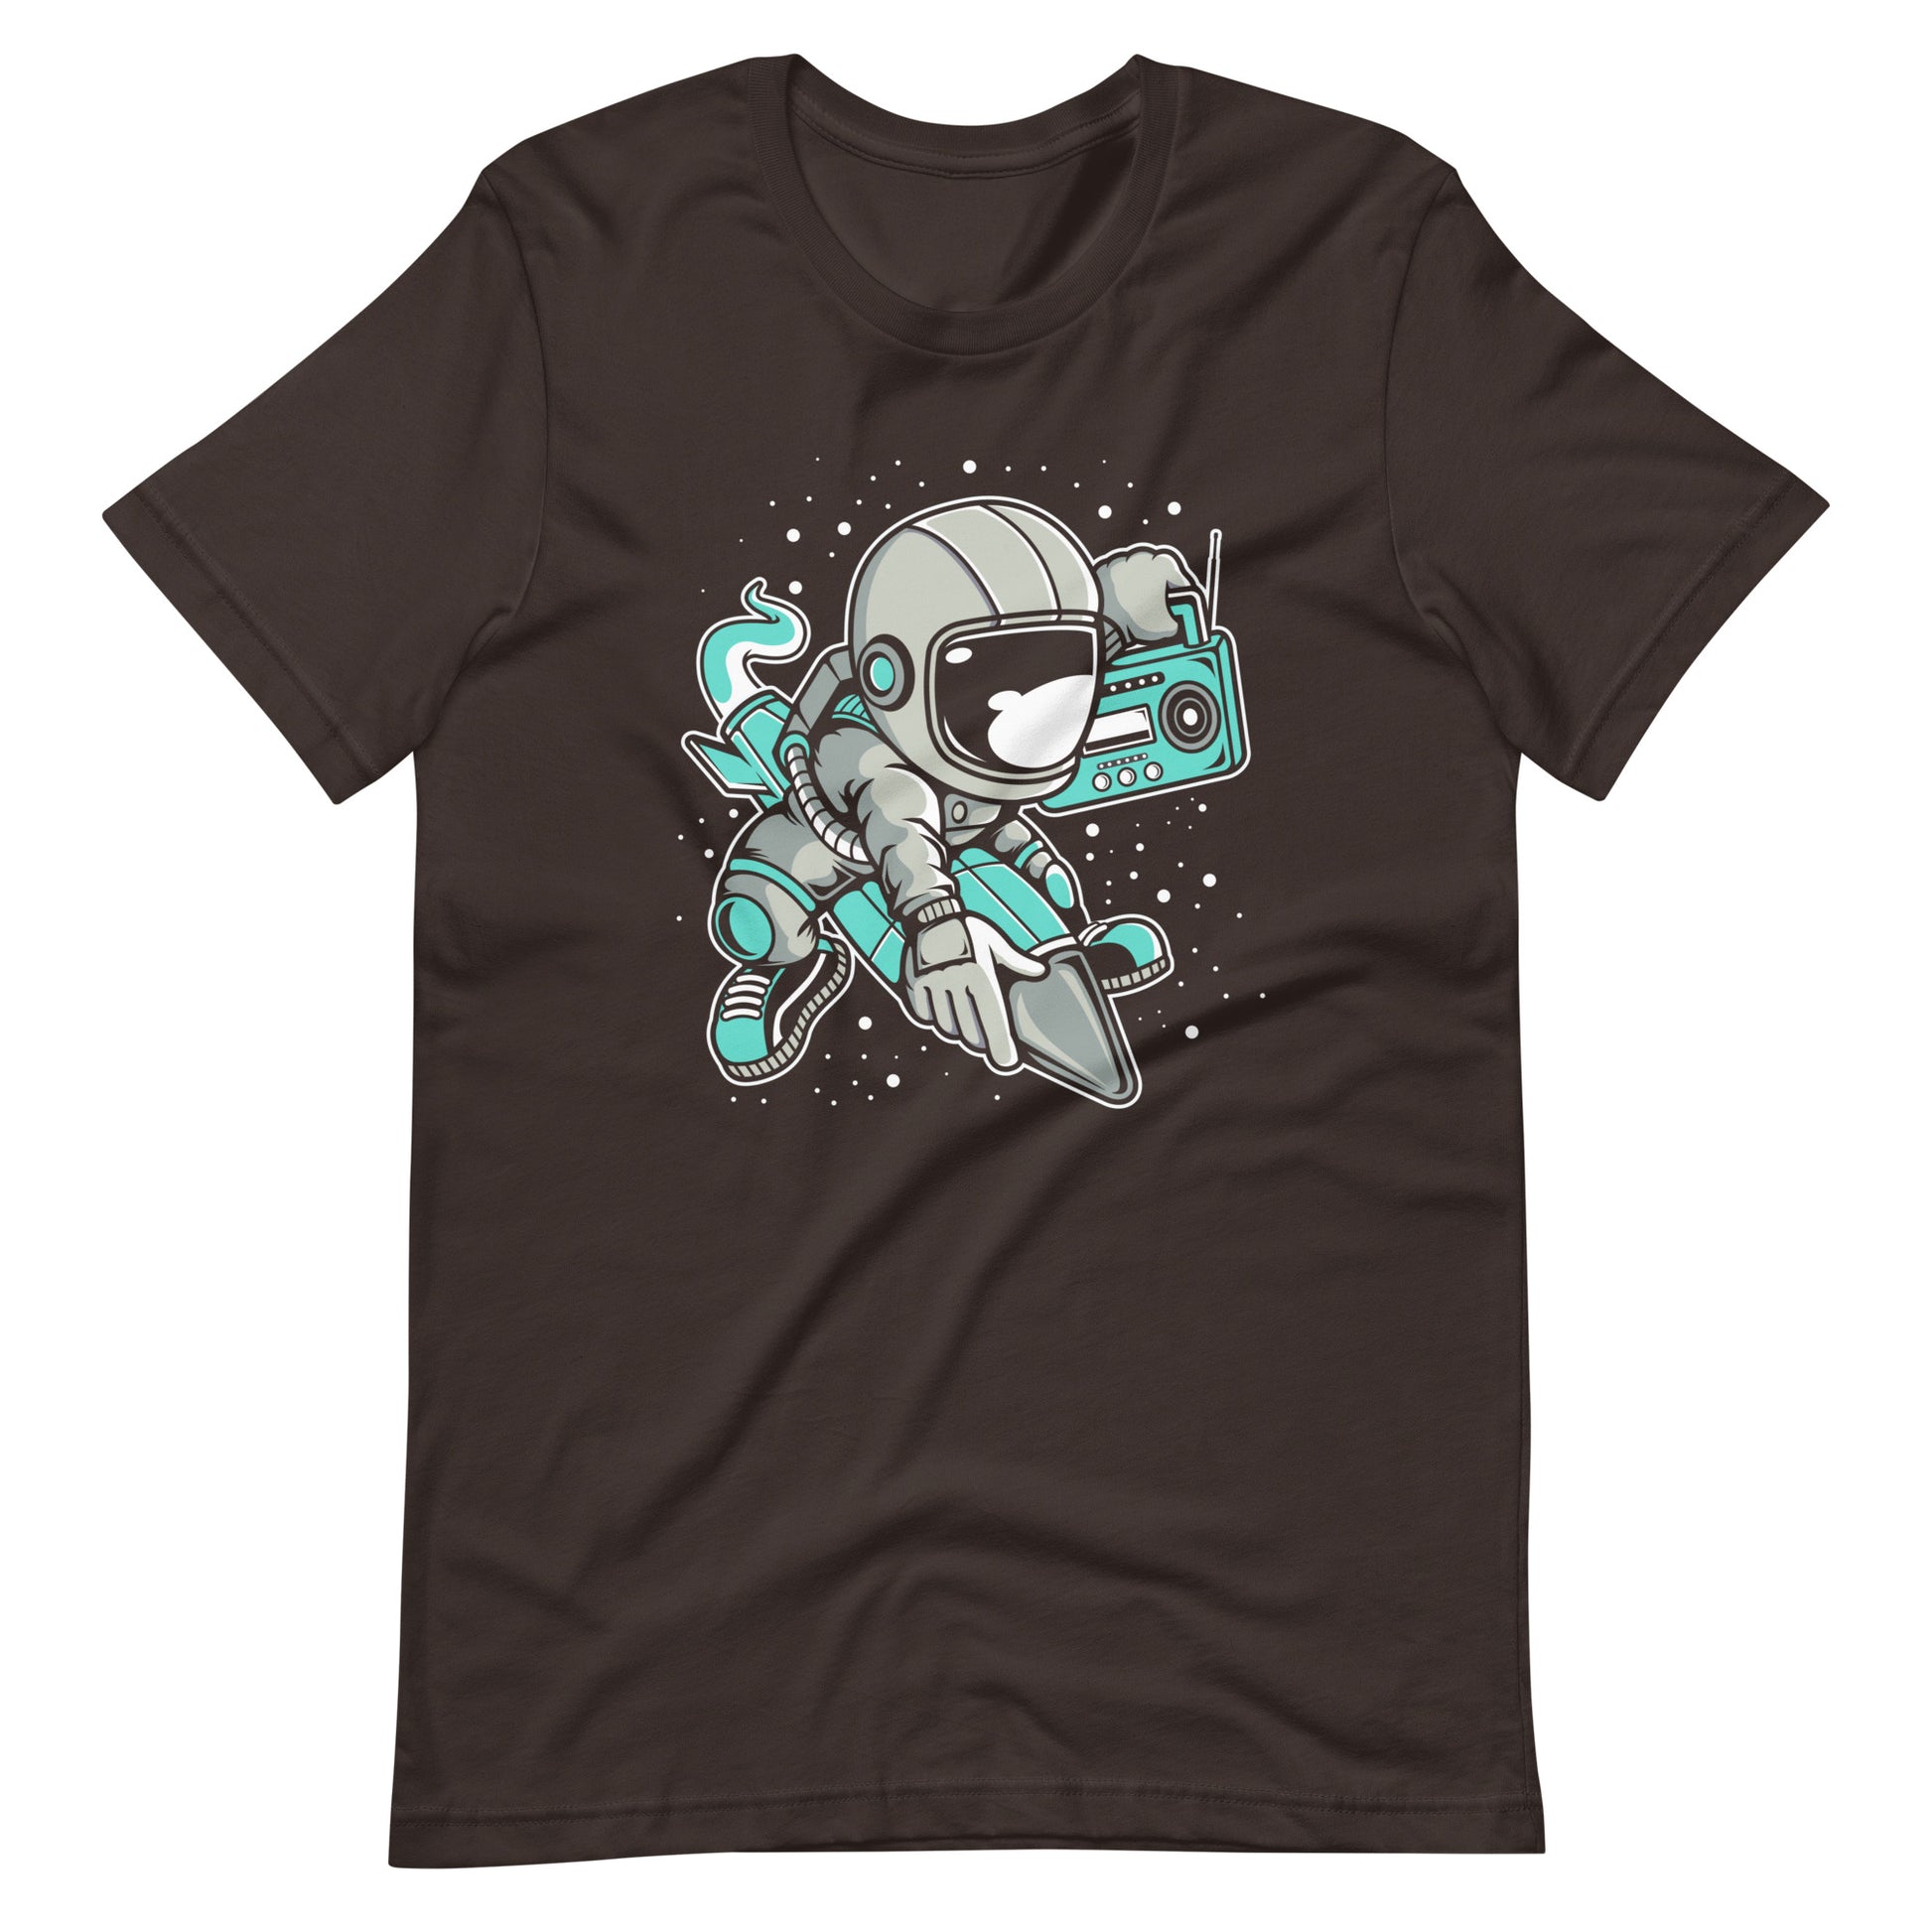 Astronaut Rocket - Men's t-shirt - Brown Front